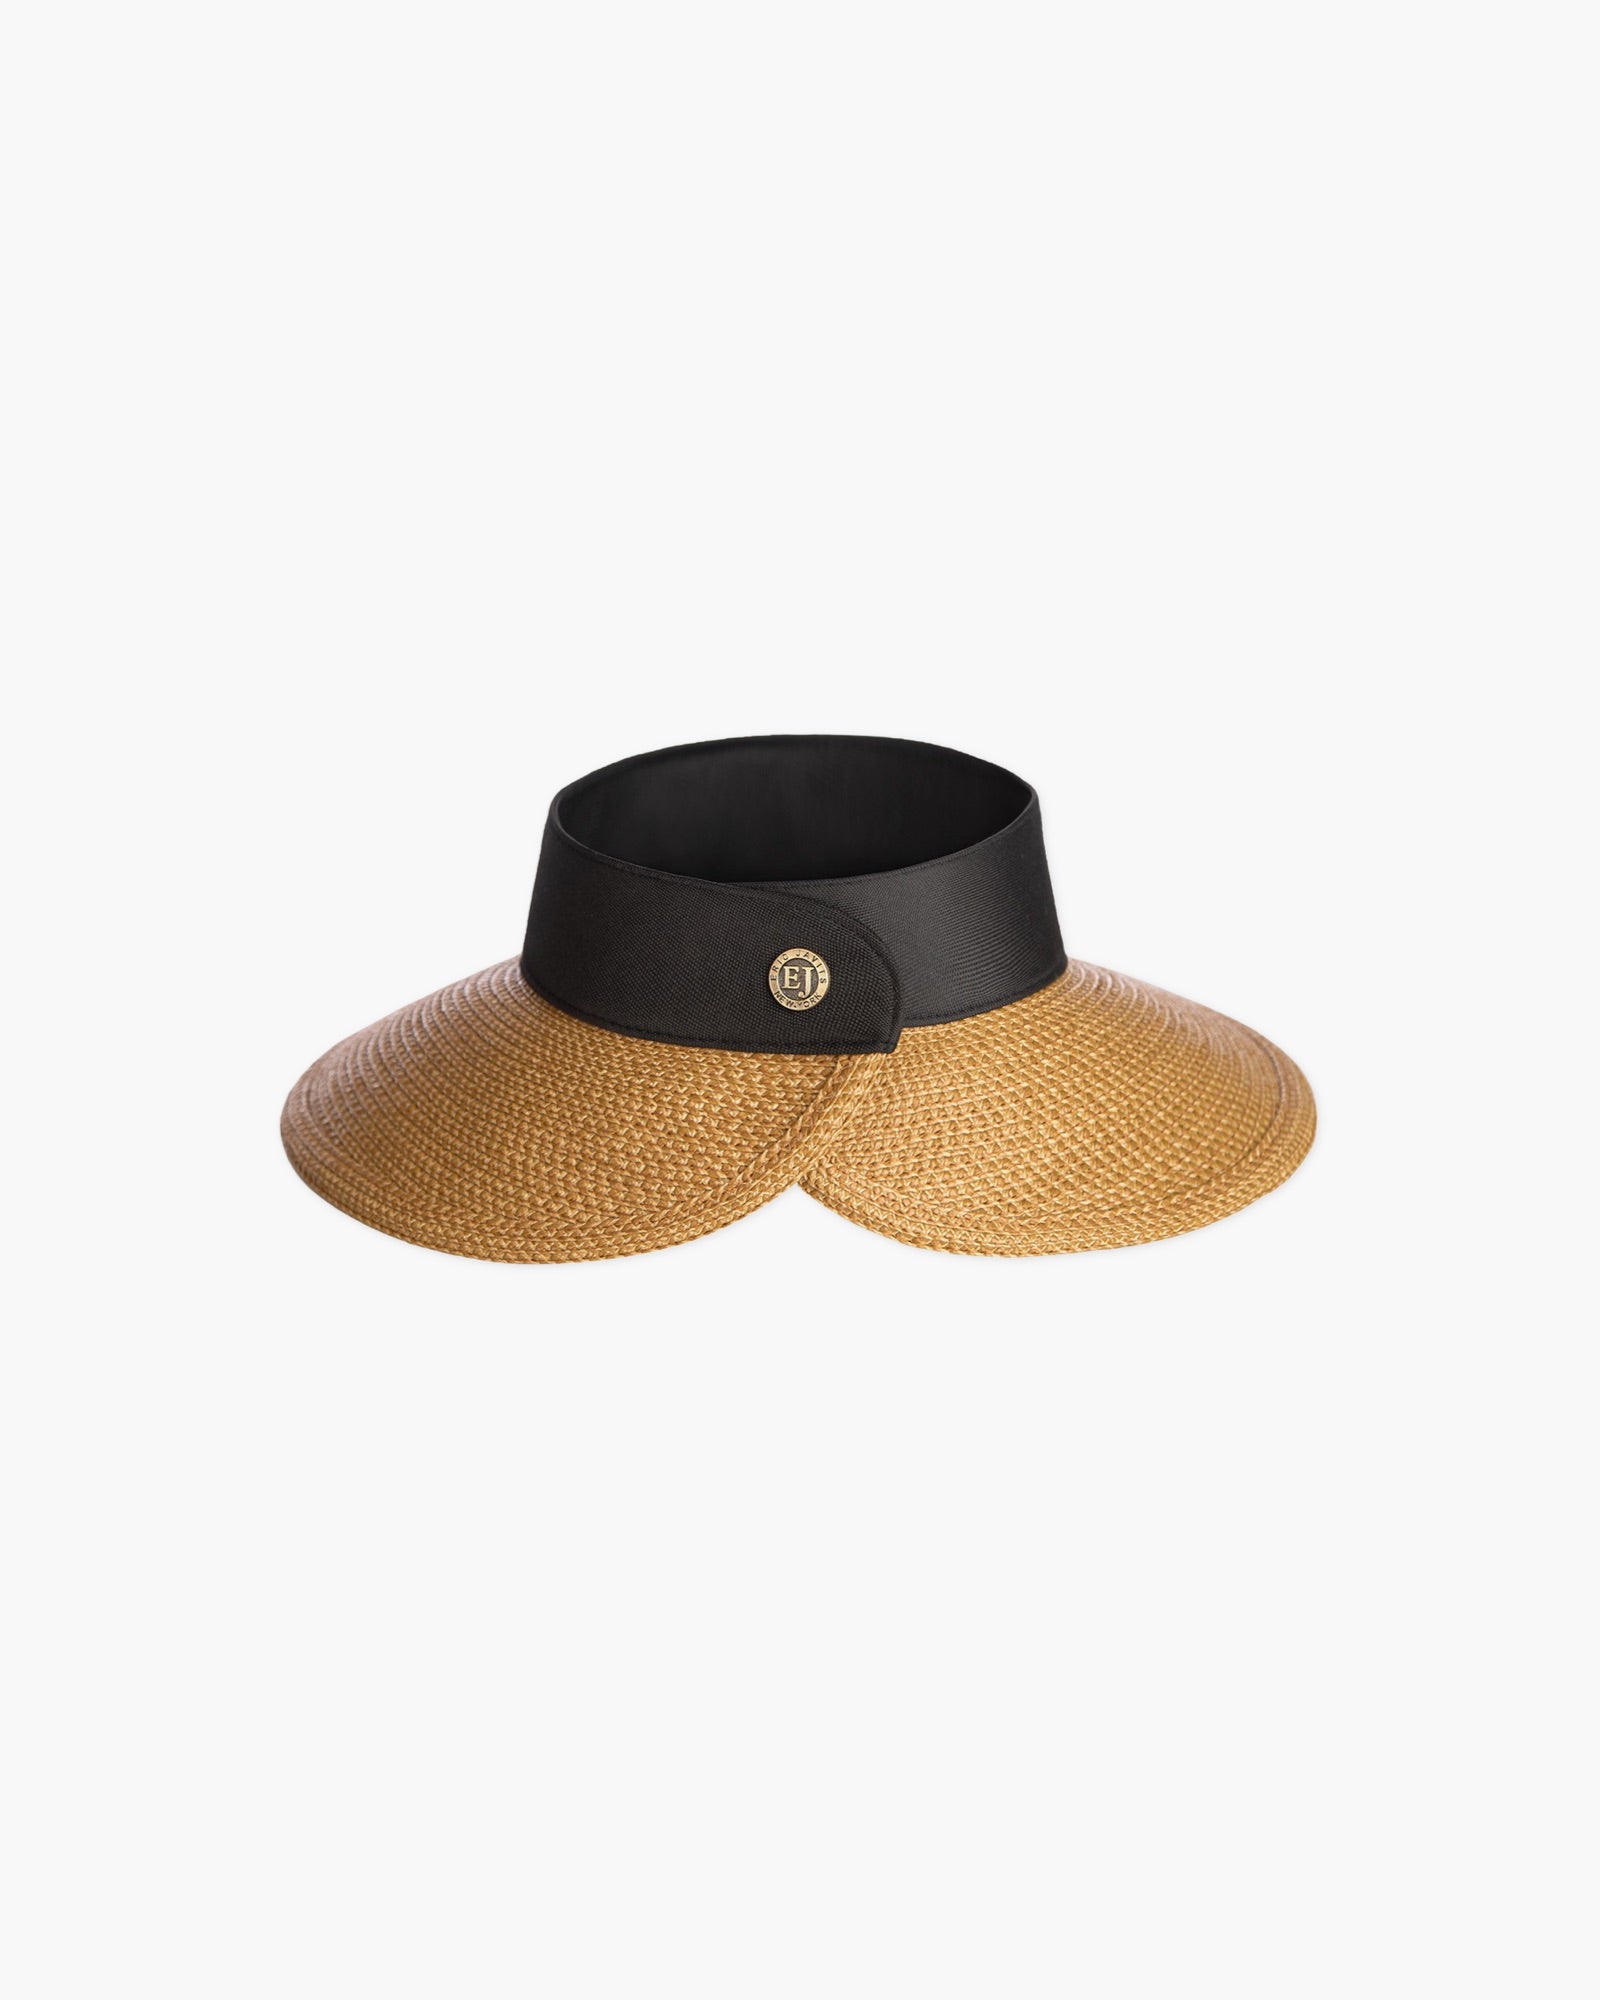 Halo Visor Hat | Women's Packable Visor | Eric Javits | Eric Javits